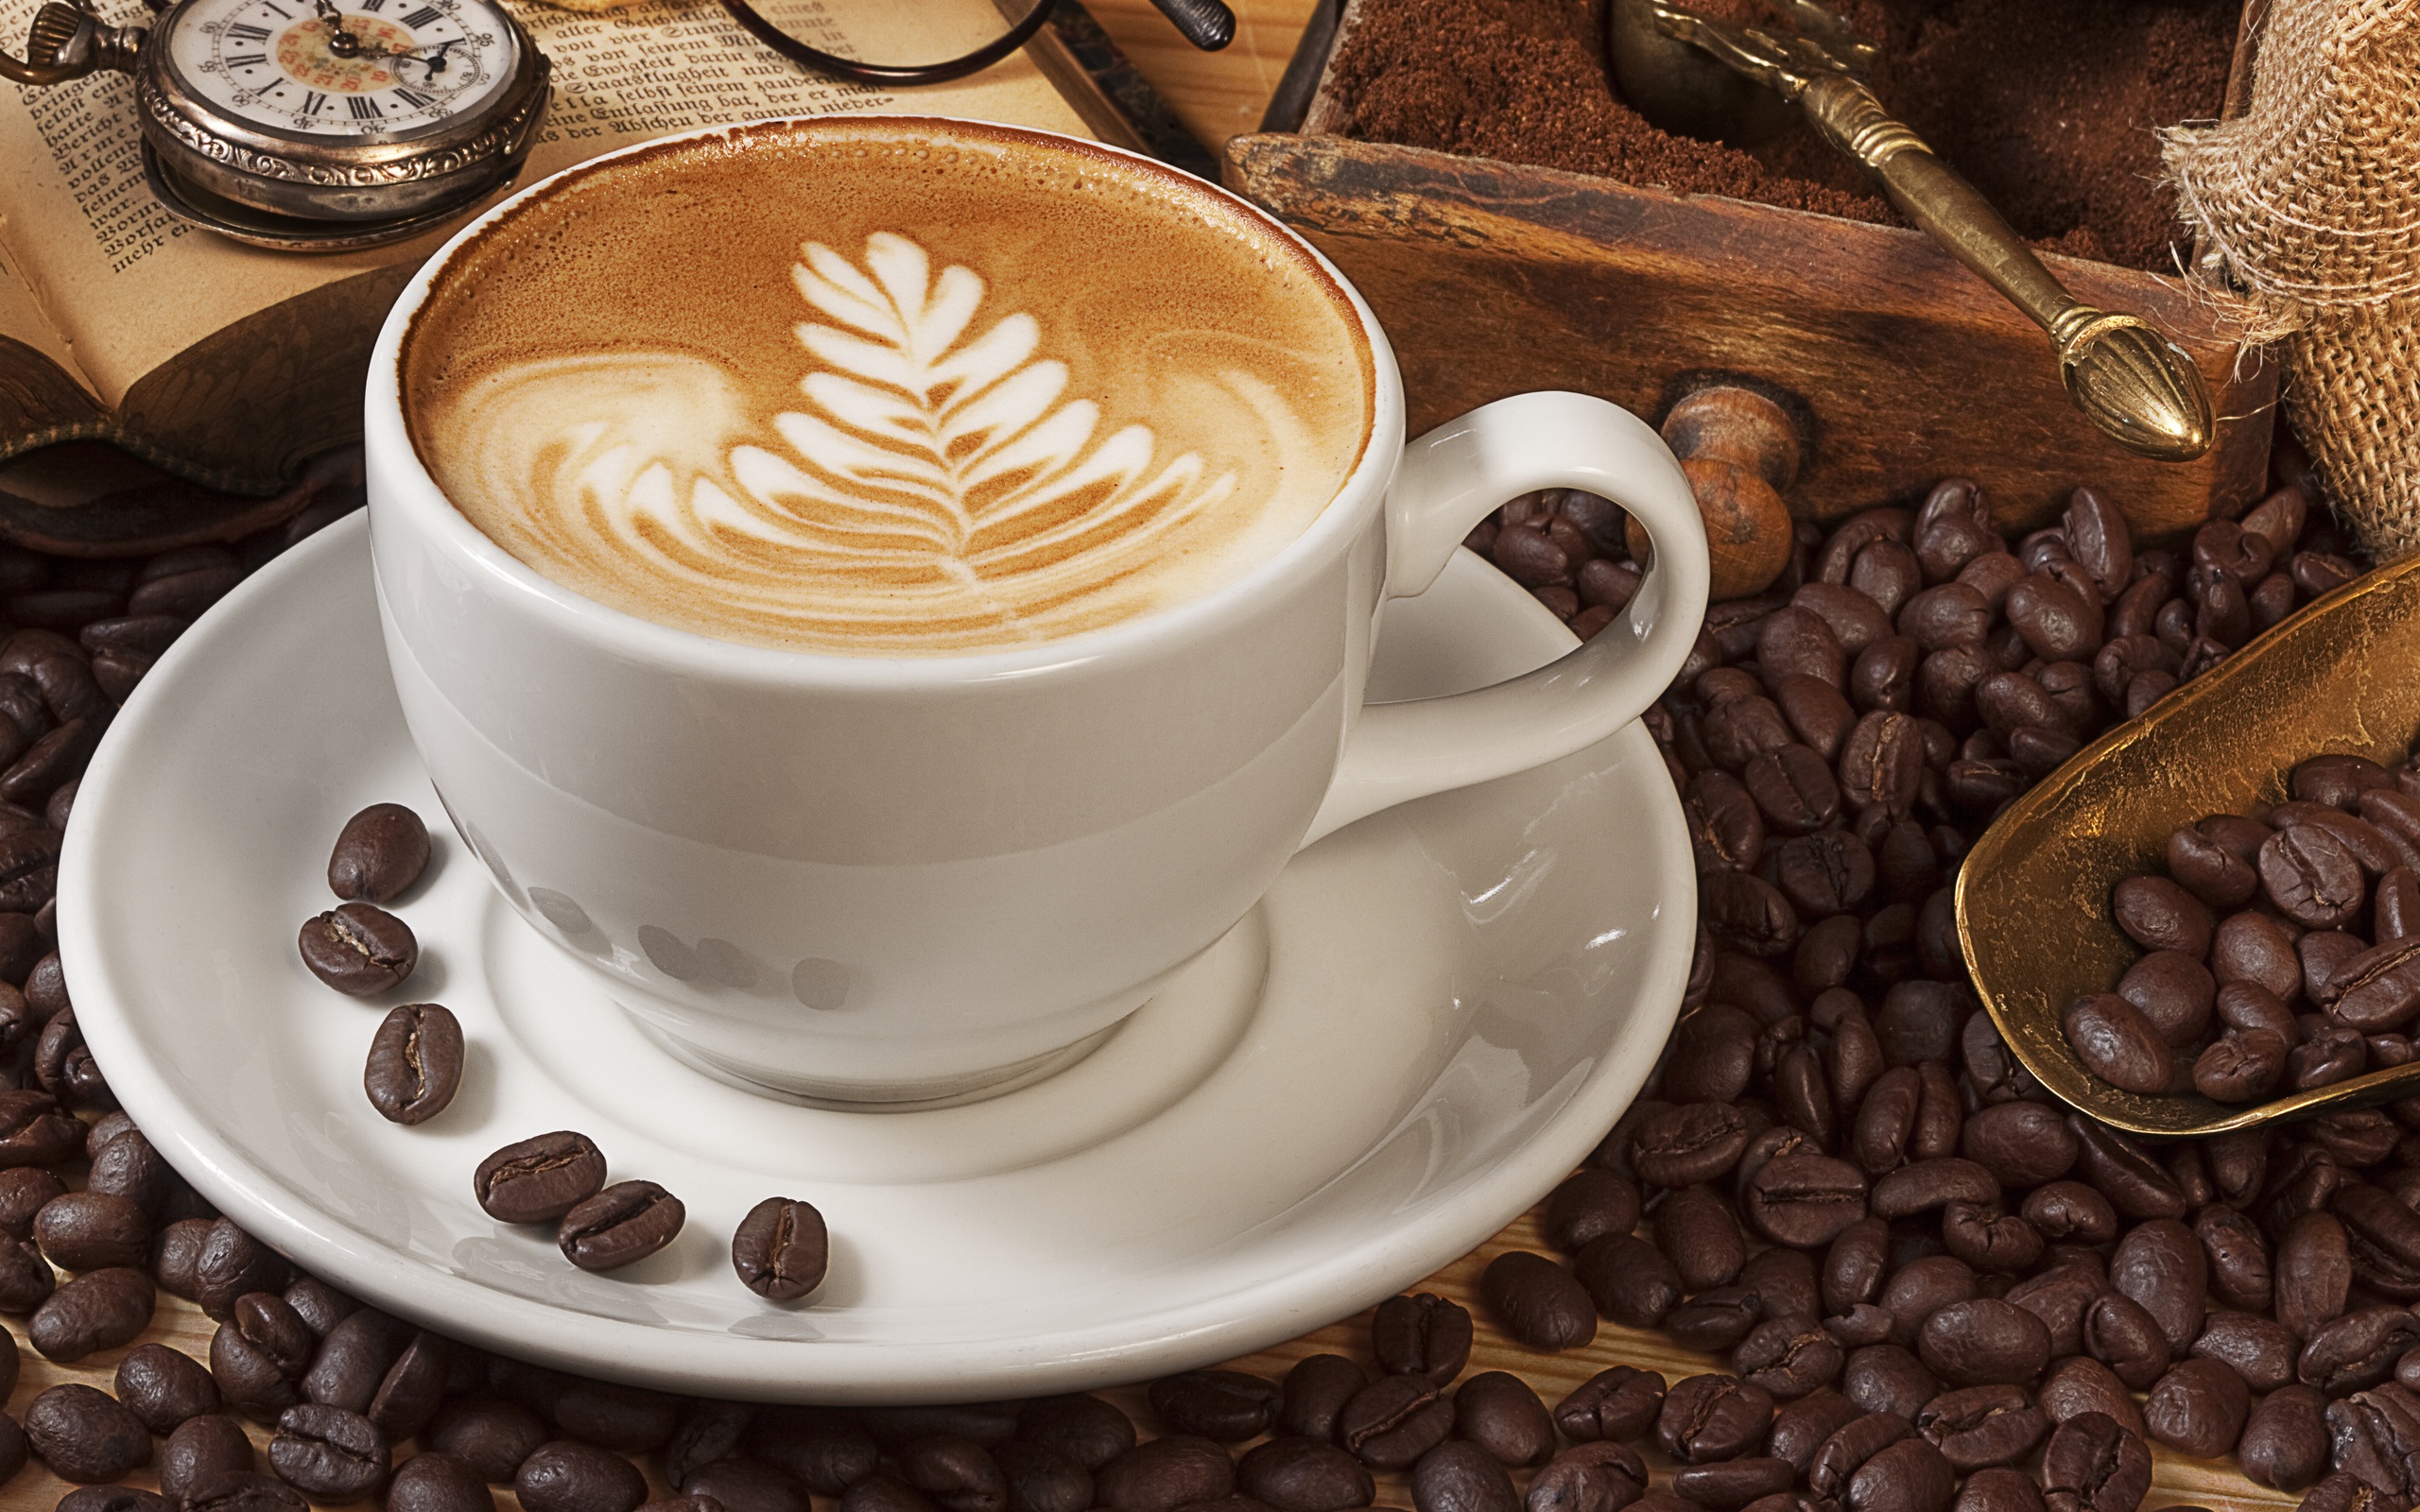 Miroco café-style cappuccinos, latte, macchiato & hot chocolate